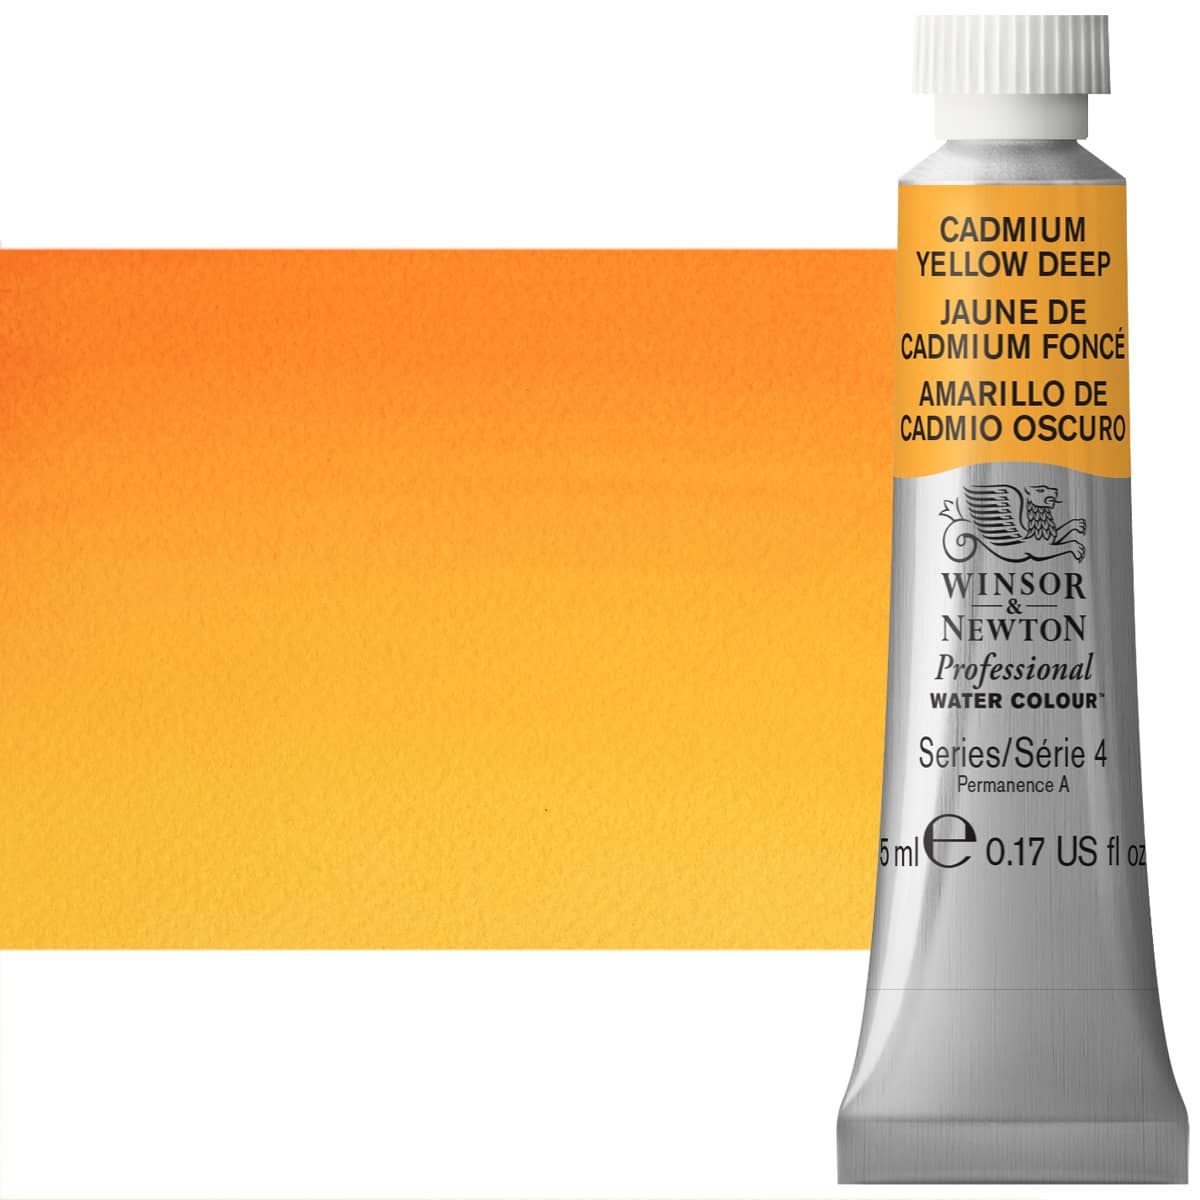 Winsor & Newton Professional Watercolor - Cadmium Orange, 5ml Tube